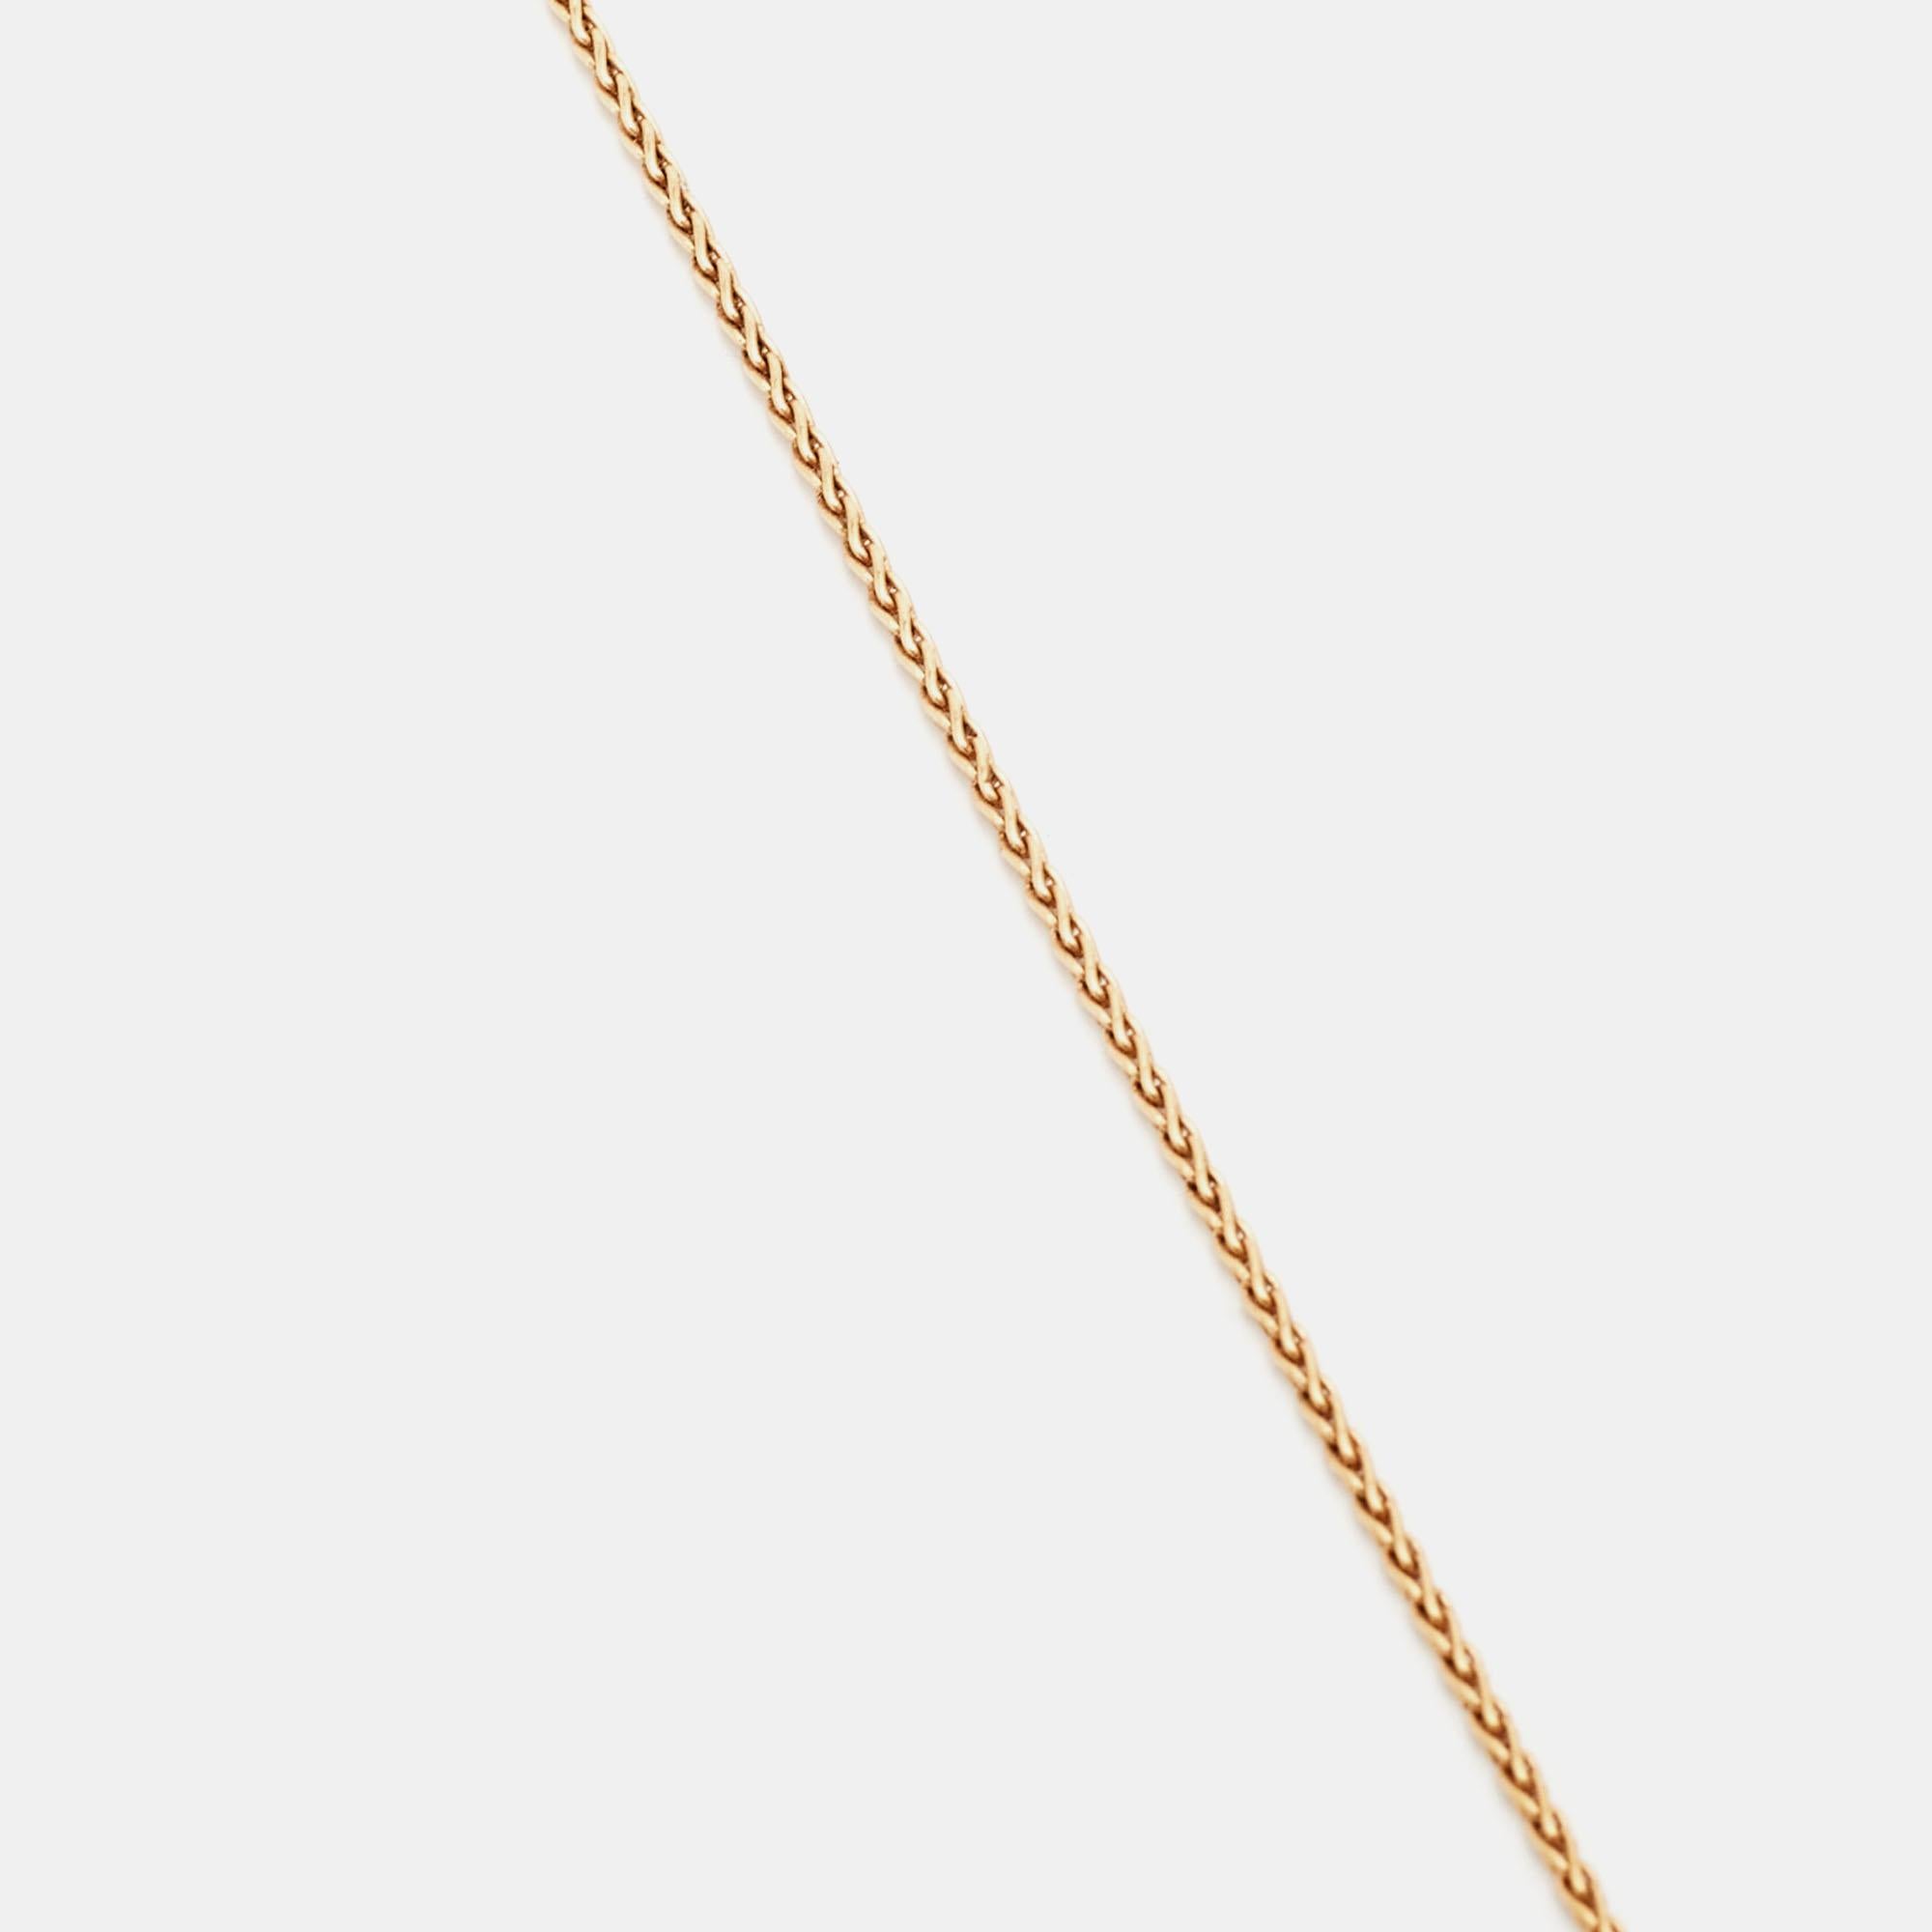 Uncut Piaget Possession Onyx Diamond 18k Rose Gold Long Necklace For Sale